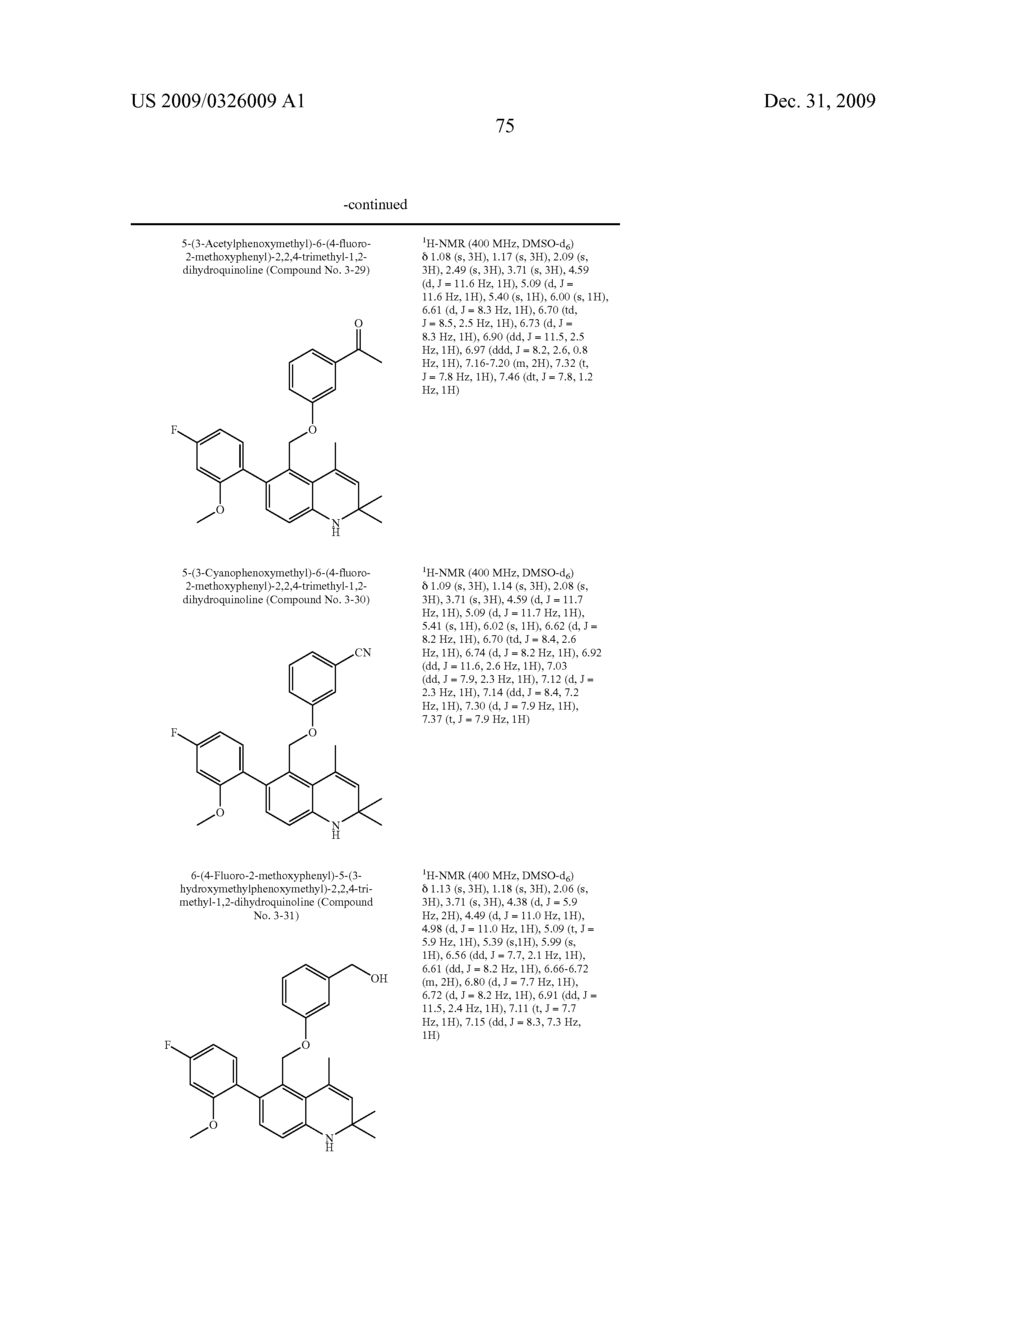 Novel 1-2-Dihydroquinoline Derivative Having Glucocorticoid Receptor Binding Activity - diagram, schematic, and image 76